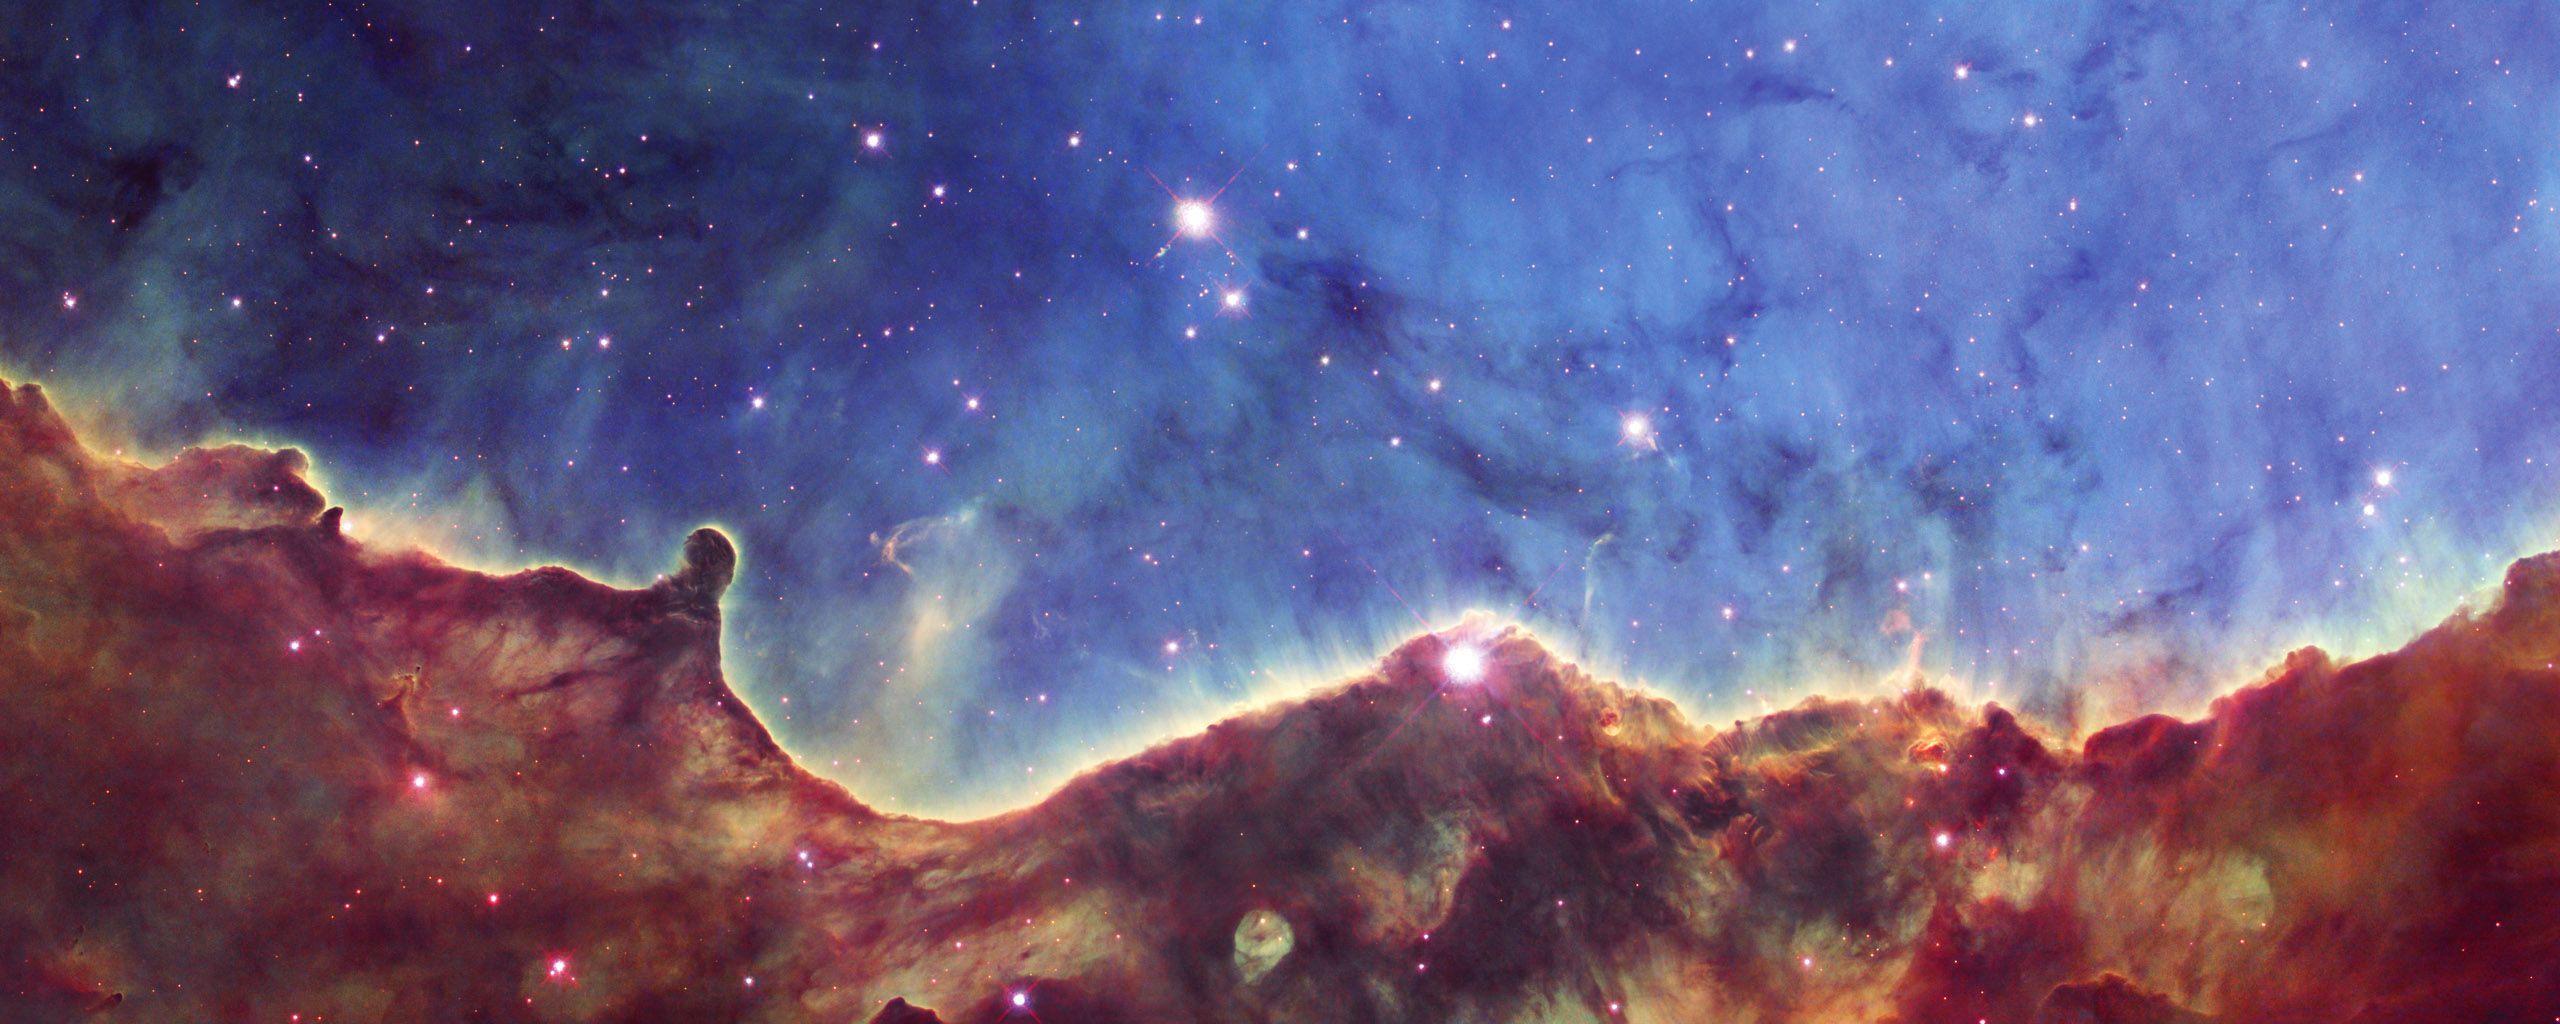 Carina Nebula, Desktop and mobile wallpaper